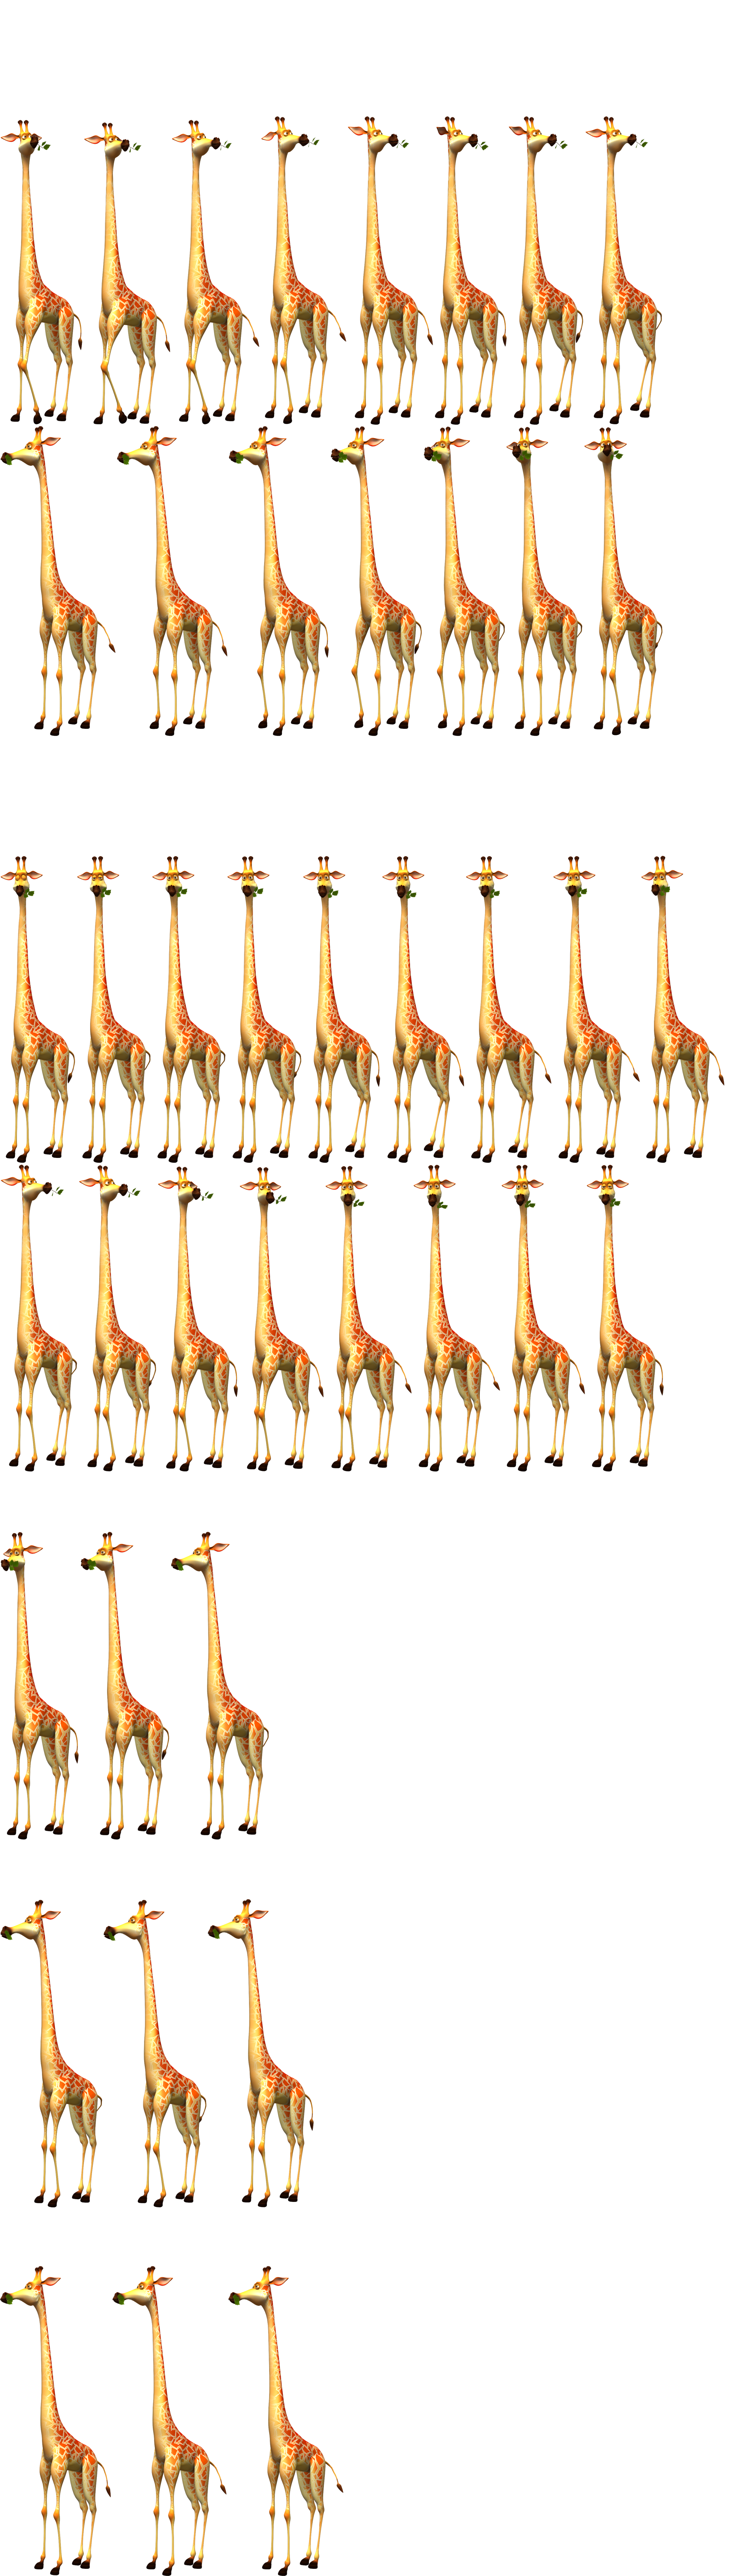 KID PIX 5: The STEAM Edition - Giraffe